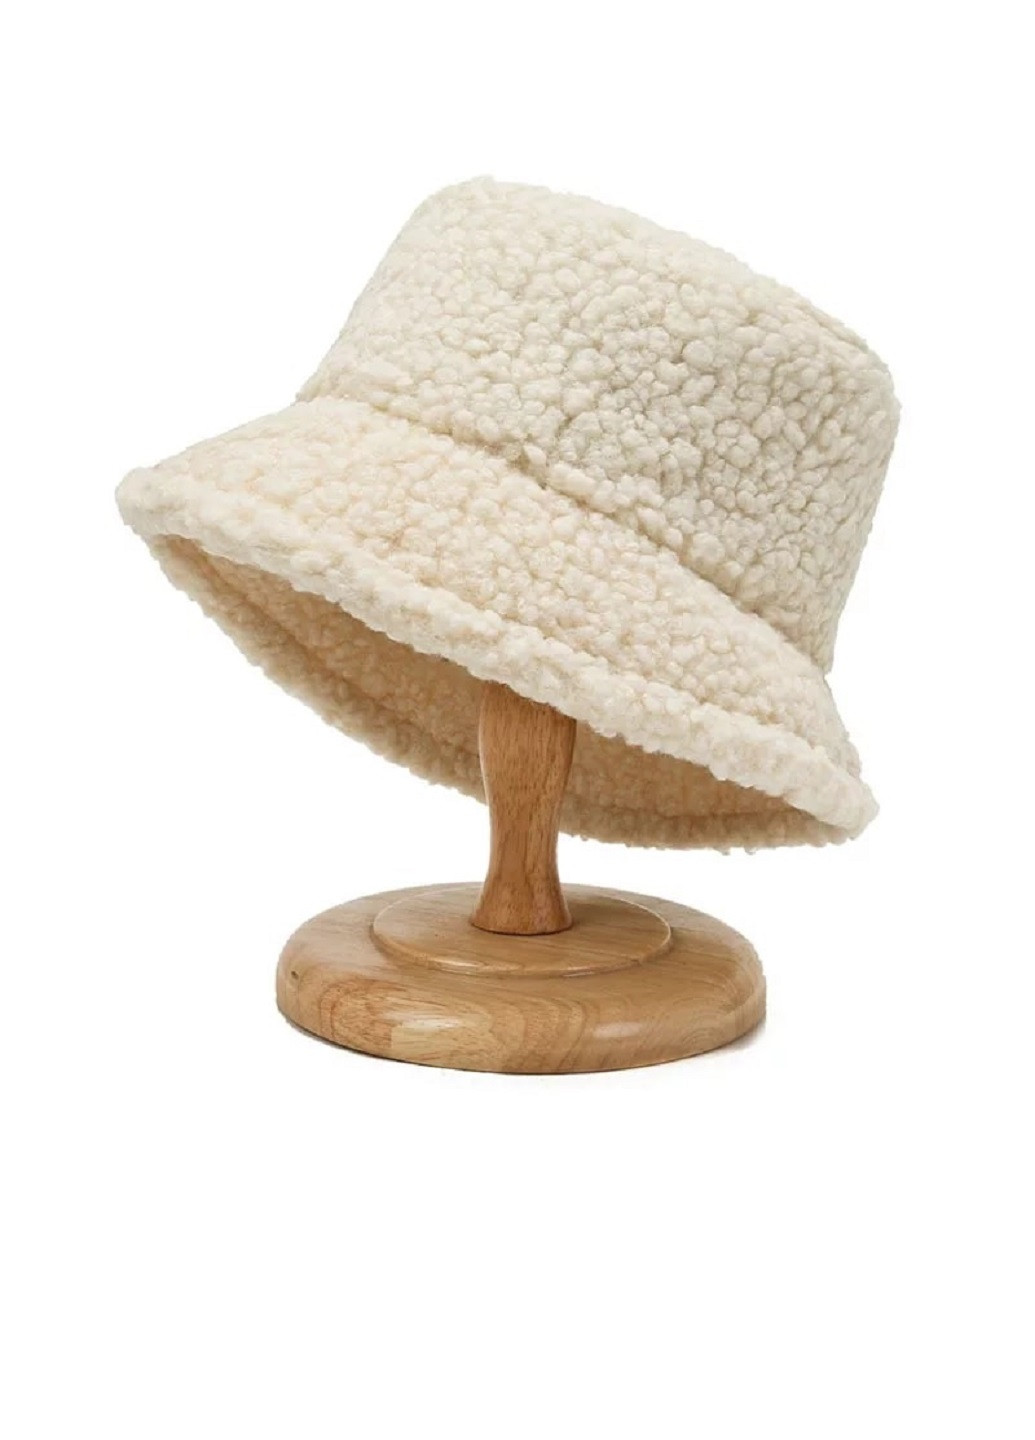 Женская меховая зимняя шапка панама теплая плюшевая пушистая Тедди барашек каракуль Бежевый NoName панама (250515552)